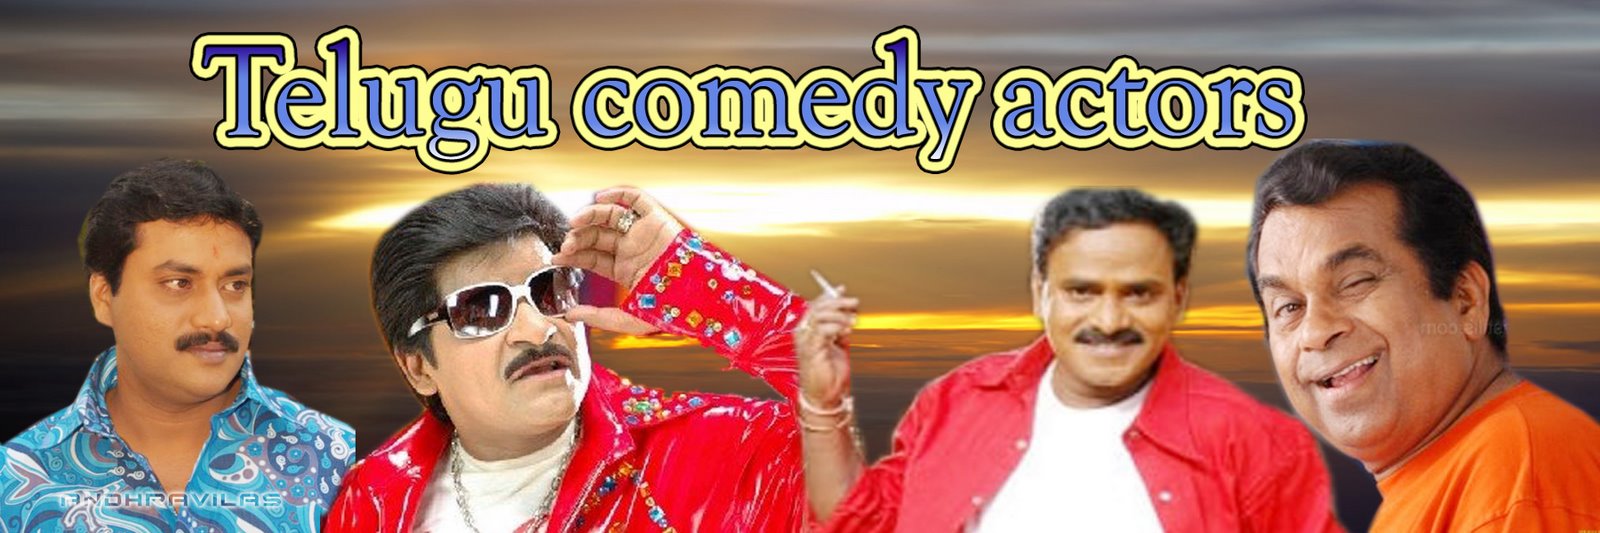 telugu comedy actors